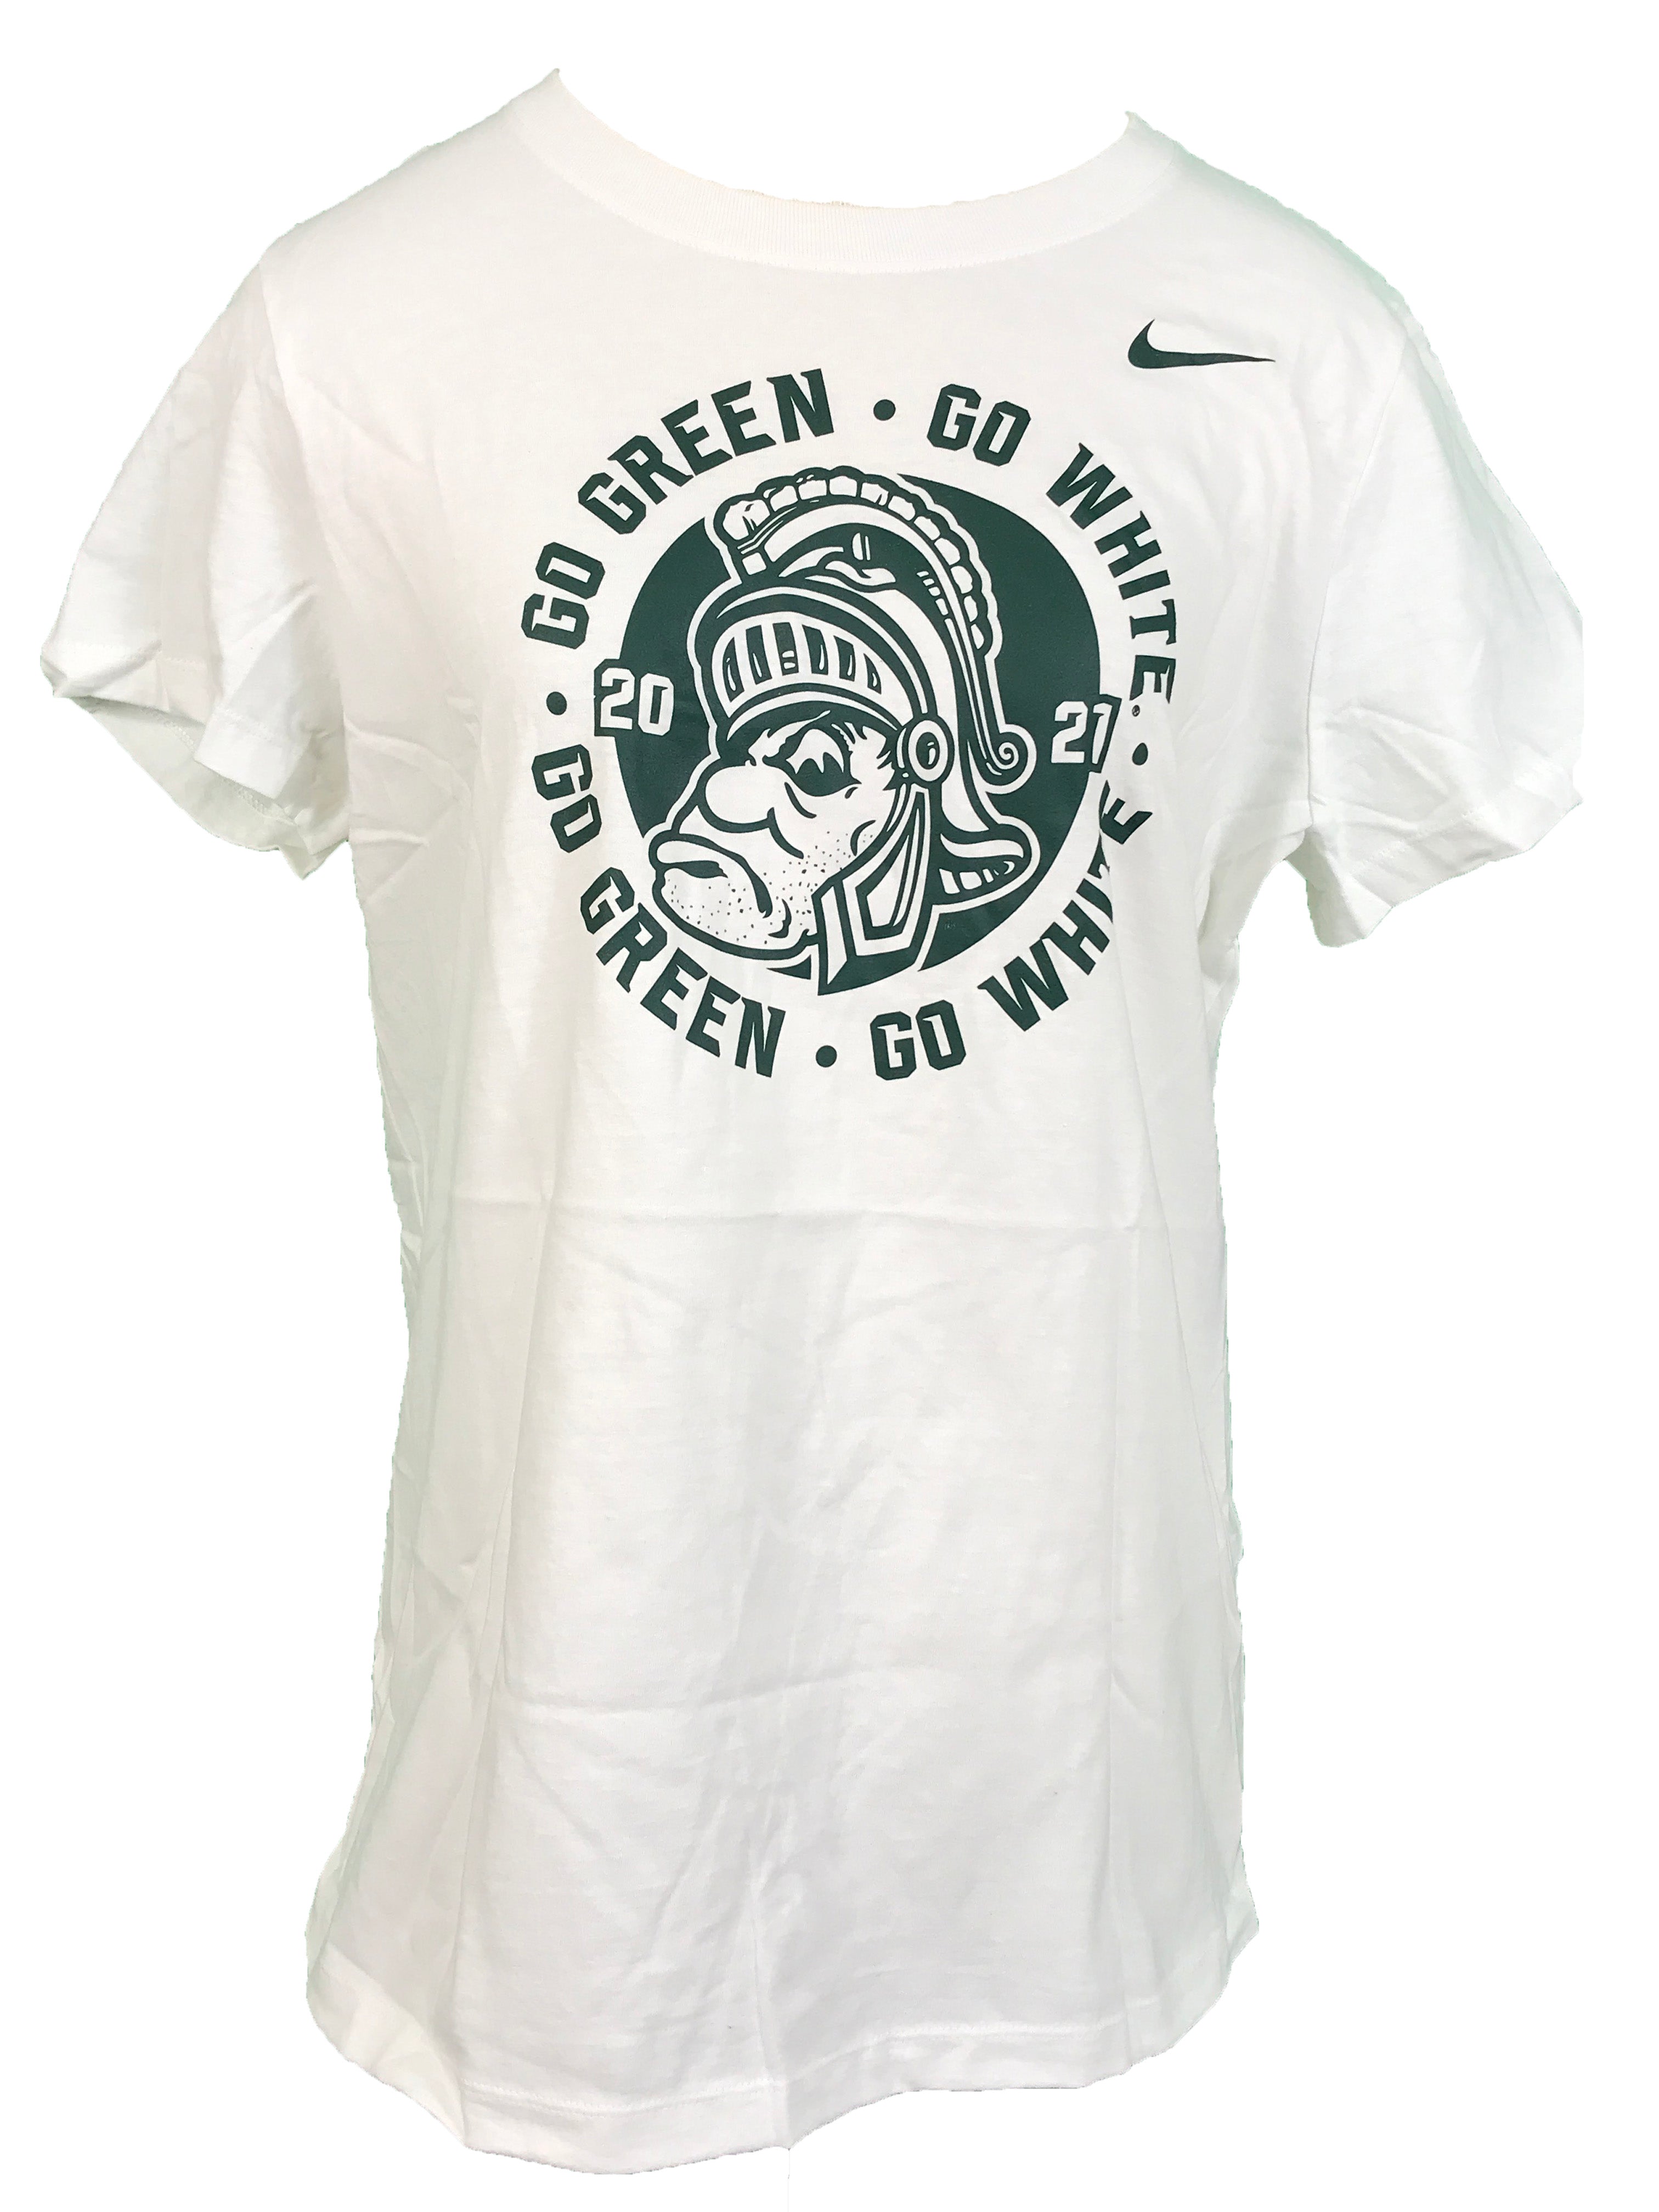 Nike White 2021 MSU Football T-Shirt Women's Size M